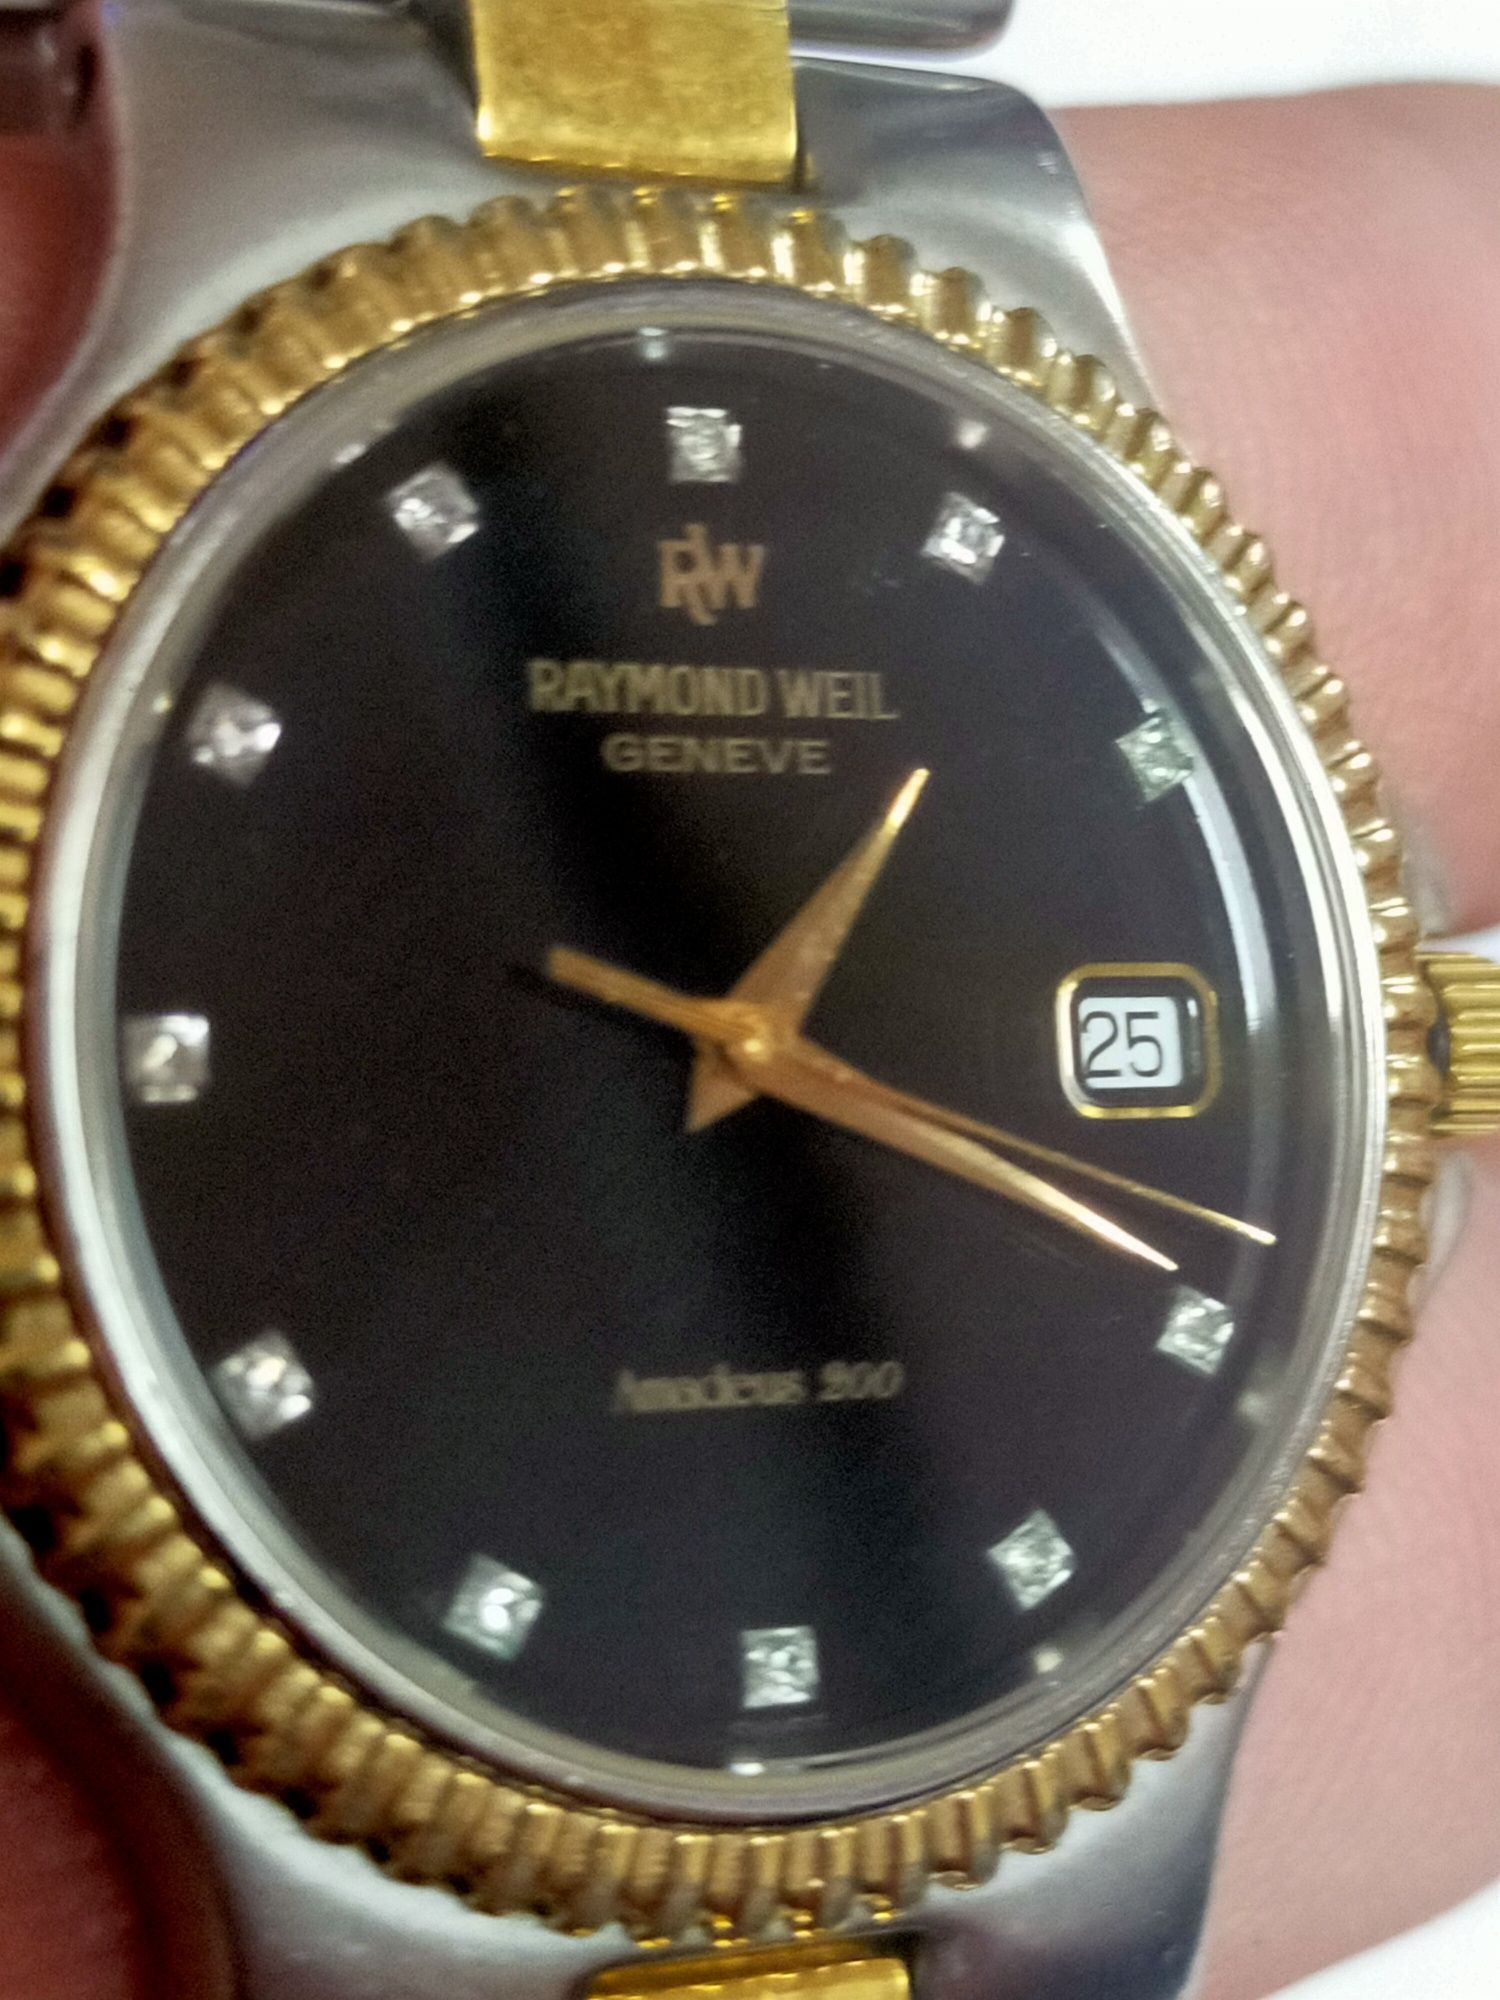 Sprzedam piękny zegarek Raimond Well Geneva